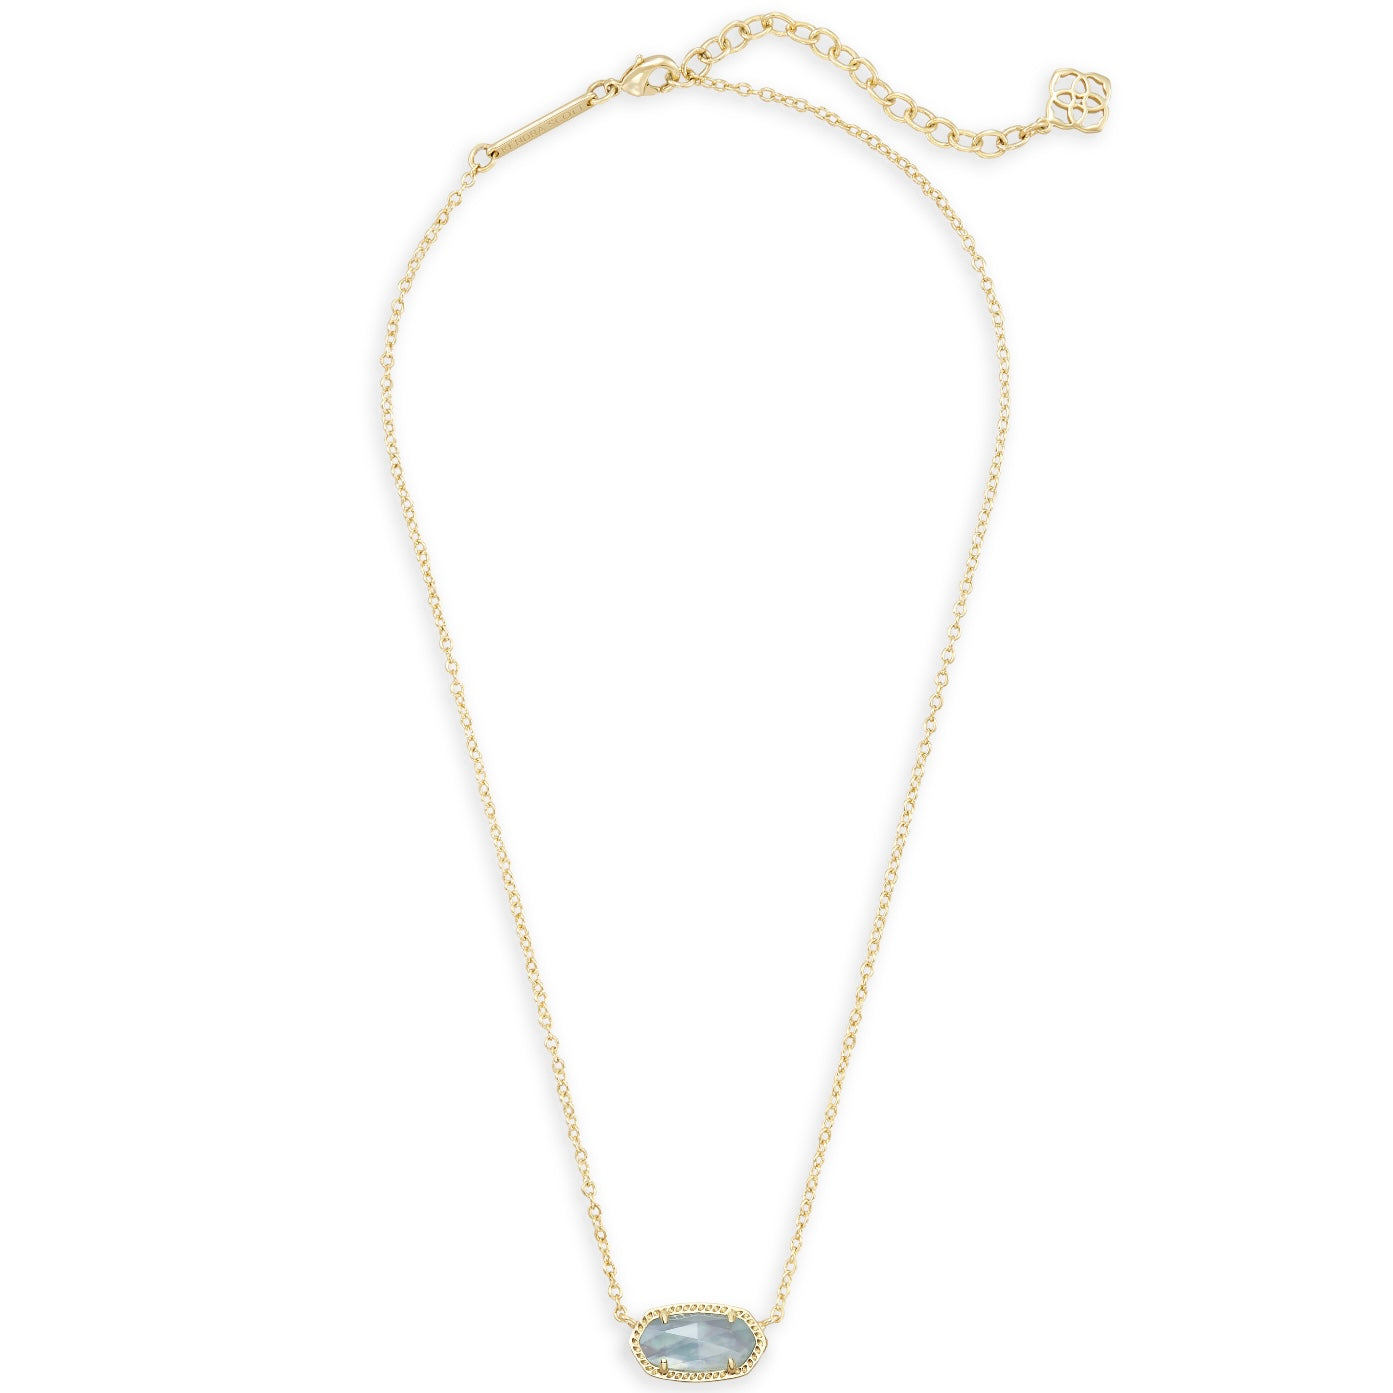 KENDRA SCOTT Elisa Gold Pendant Necklace in Light Blue Illusion - The Street Boutique 